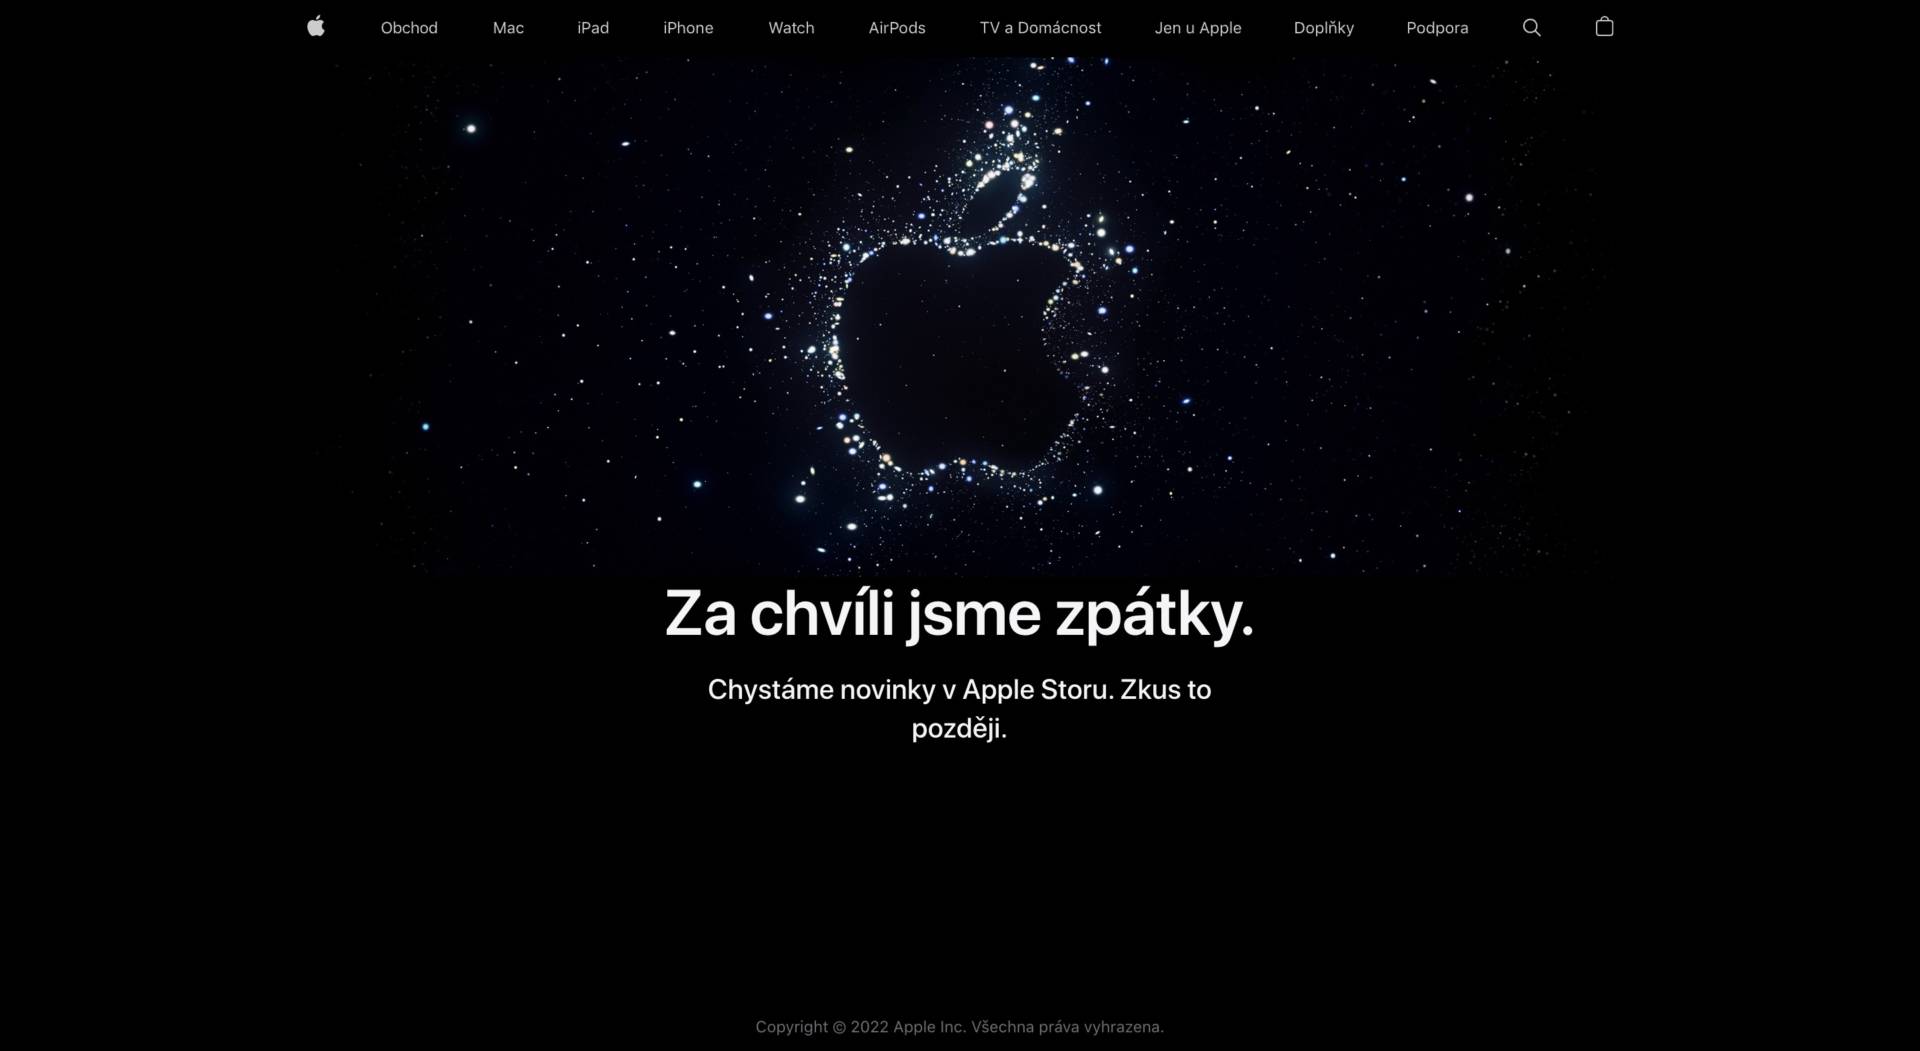 Apple Online Store